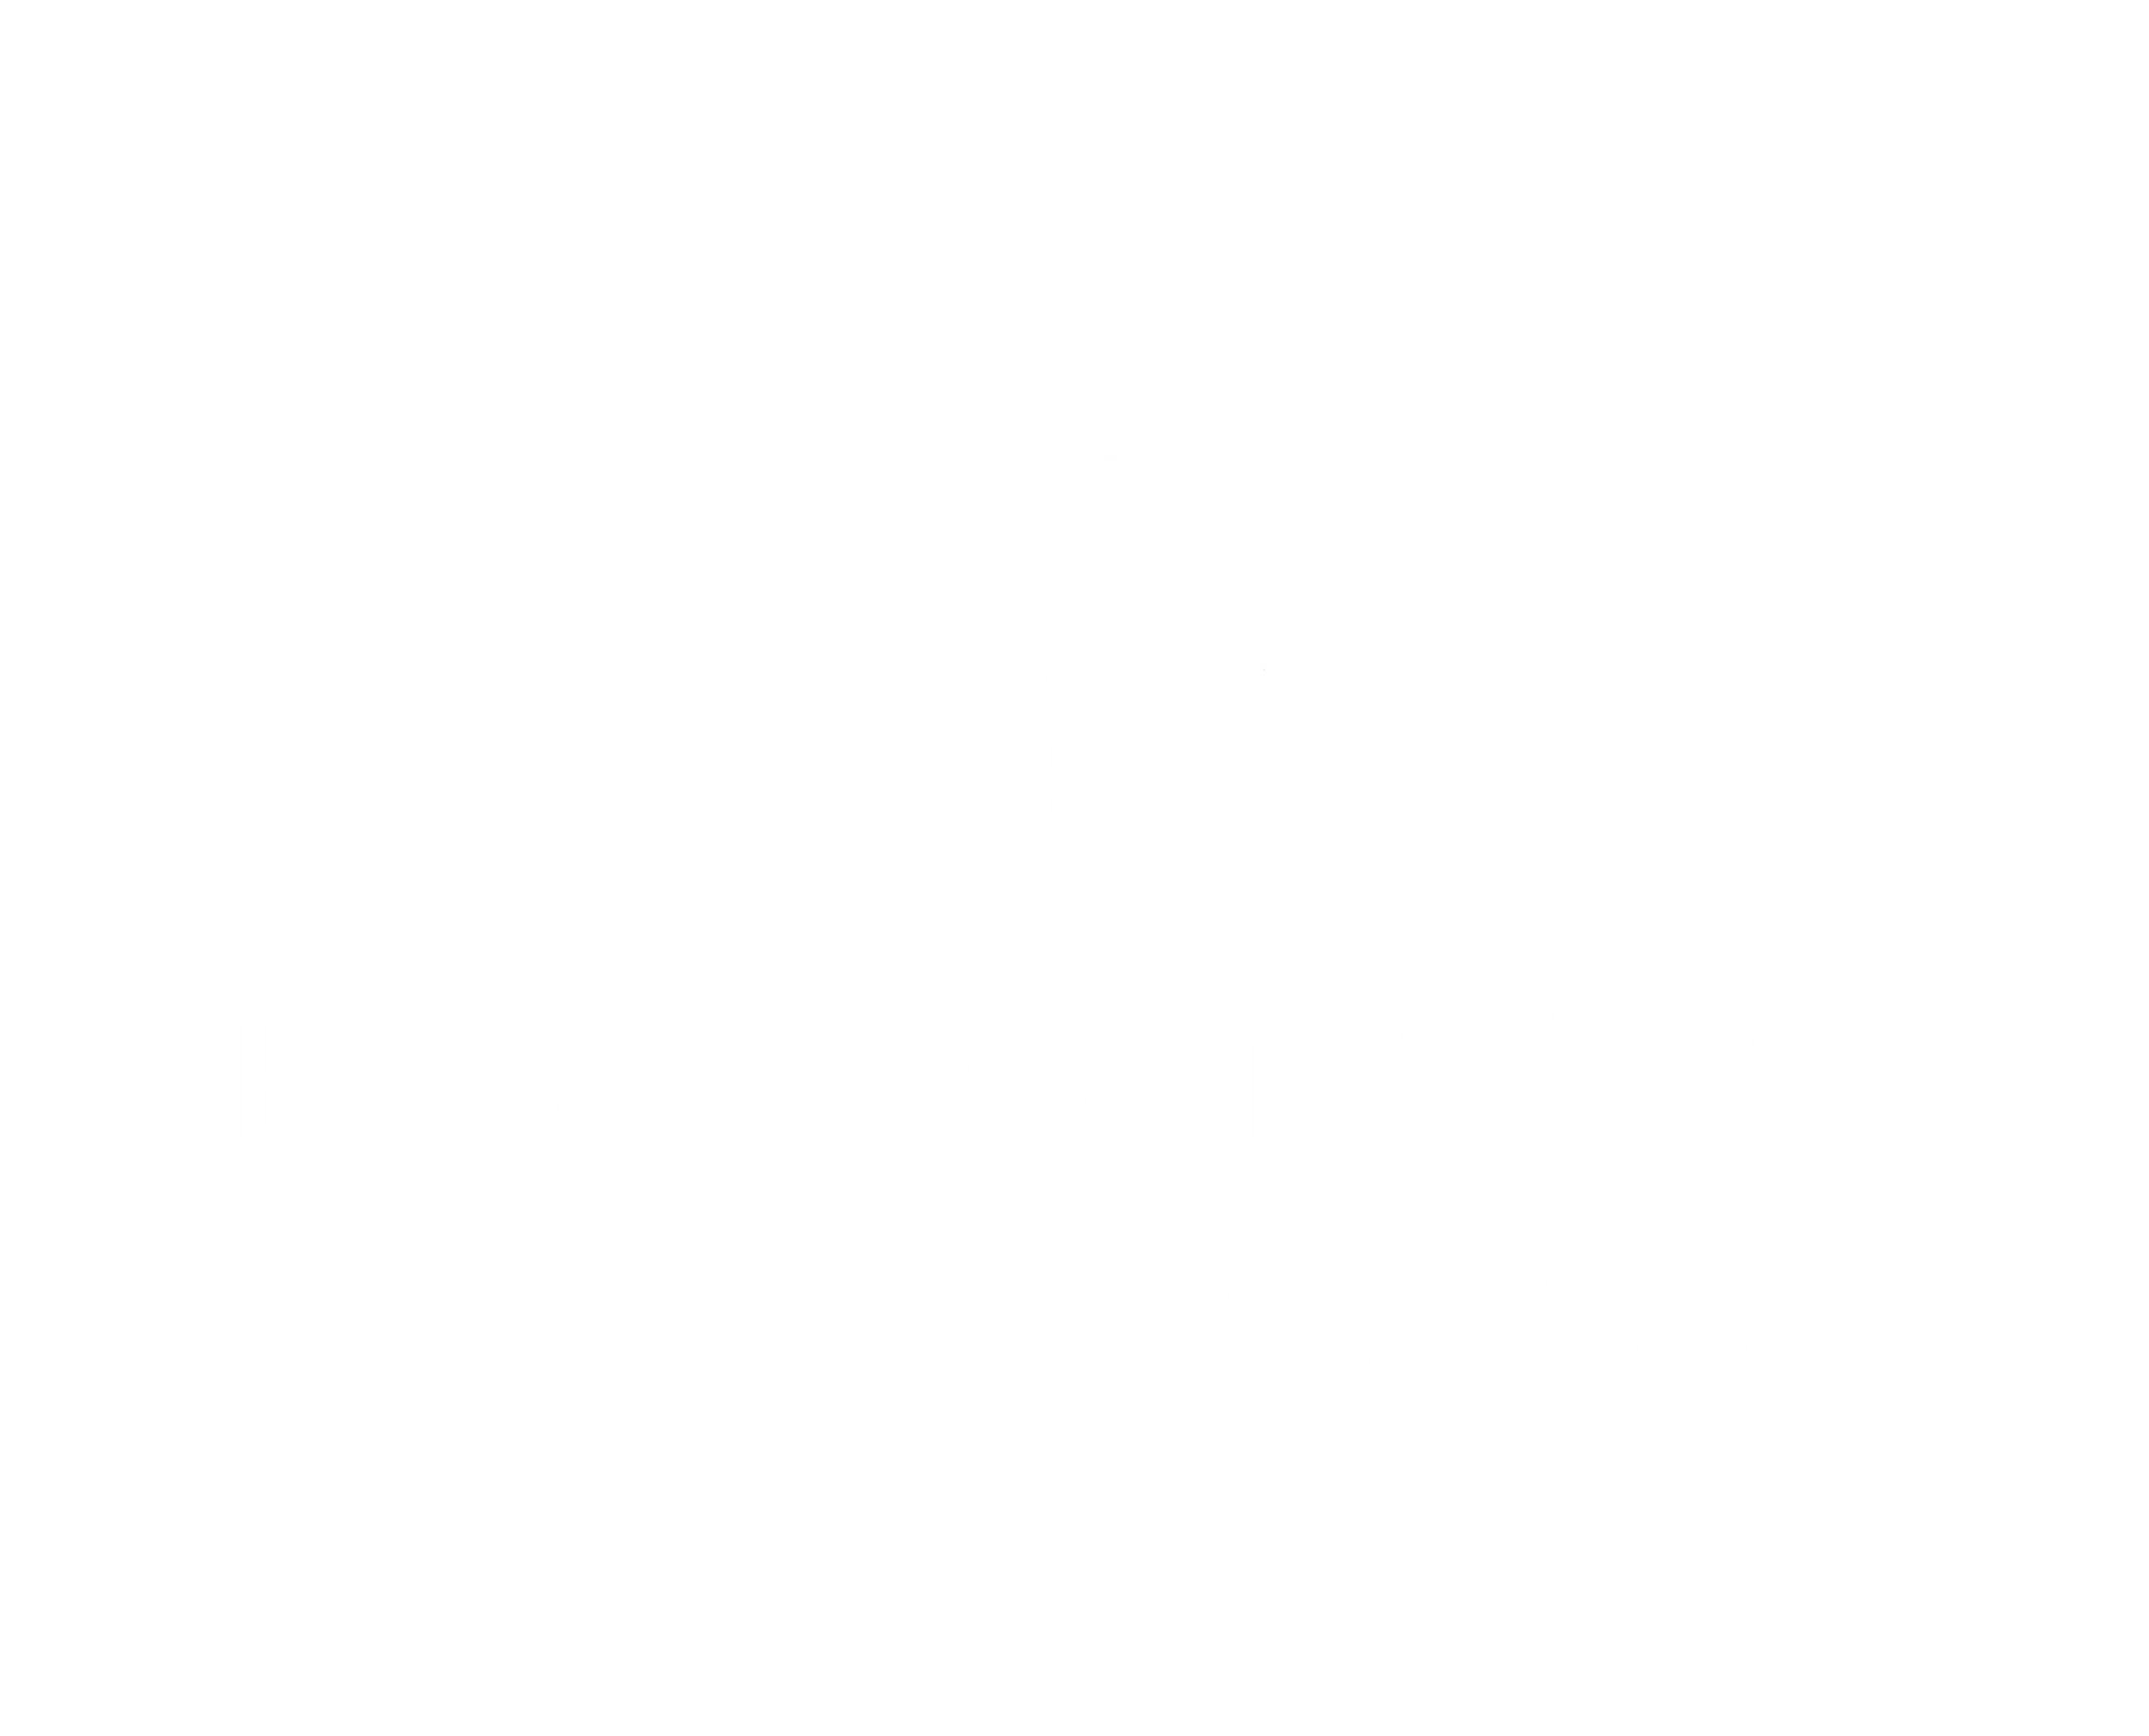 Farm Credit East Cares logo